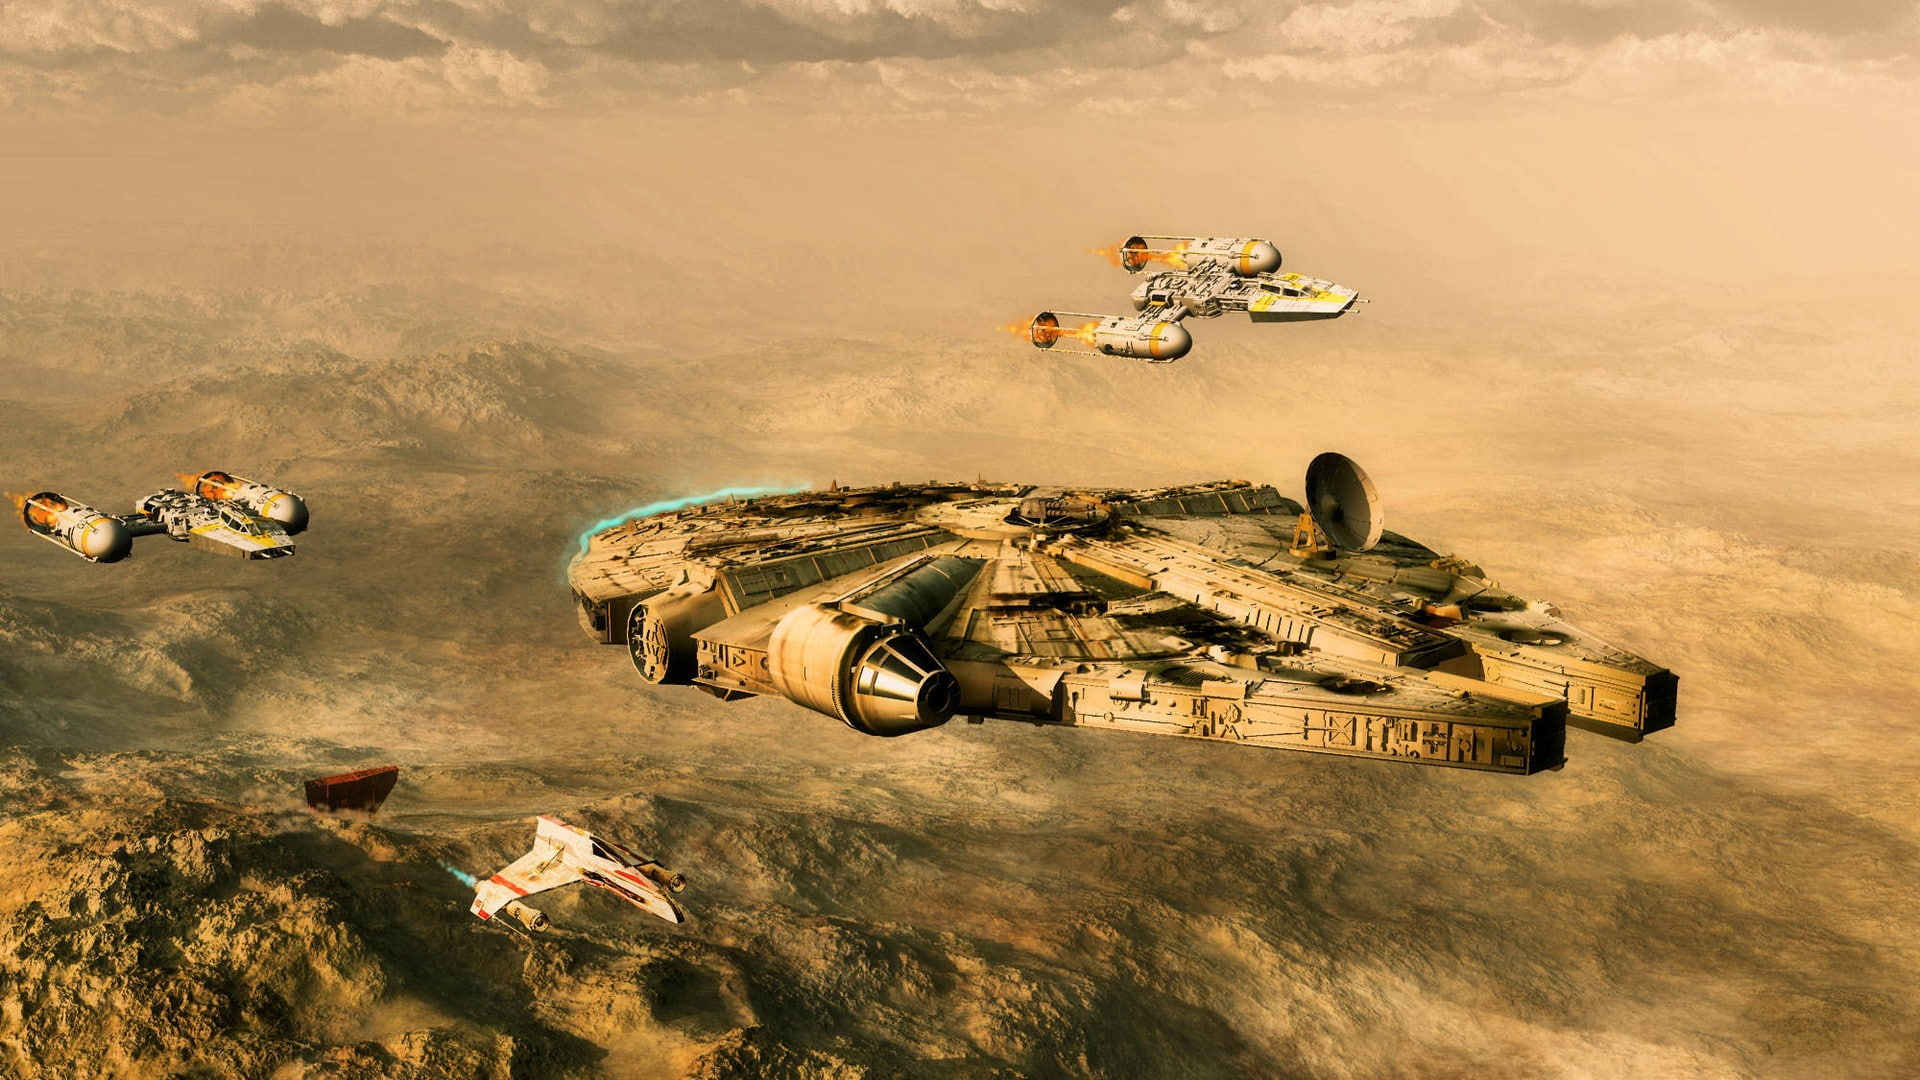 Star Wars, Millennium Falcon, Y-Wing, transportation, mode of transportation